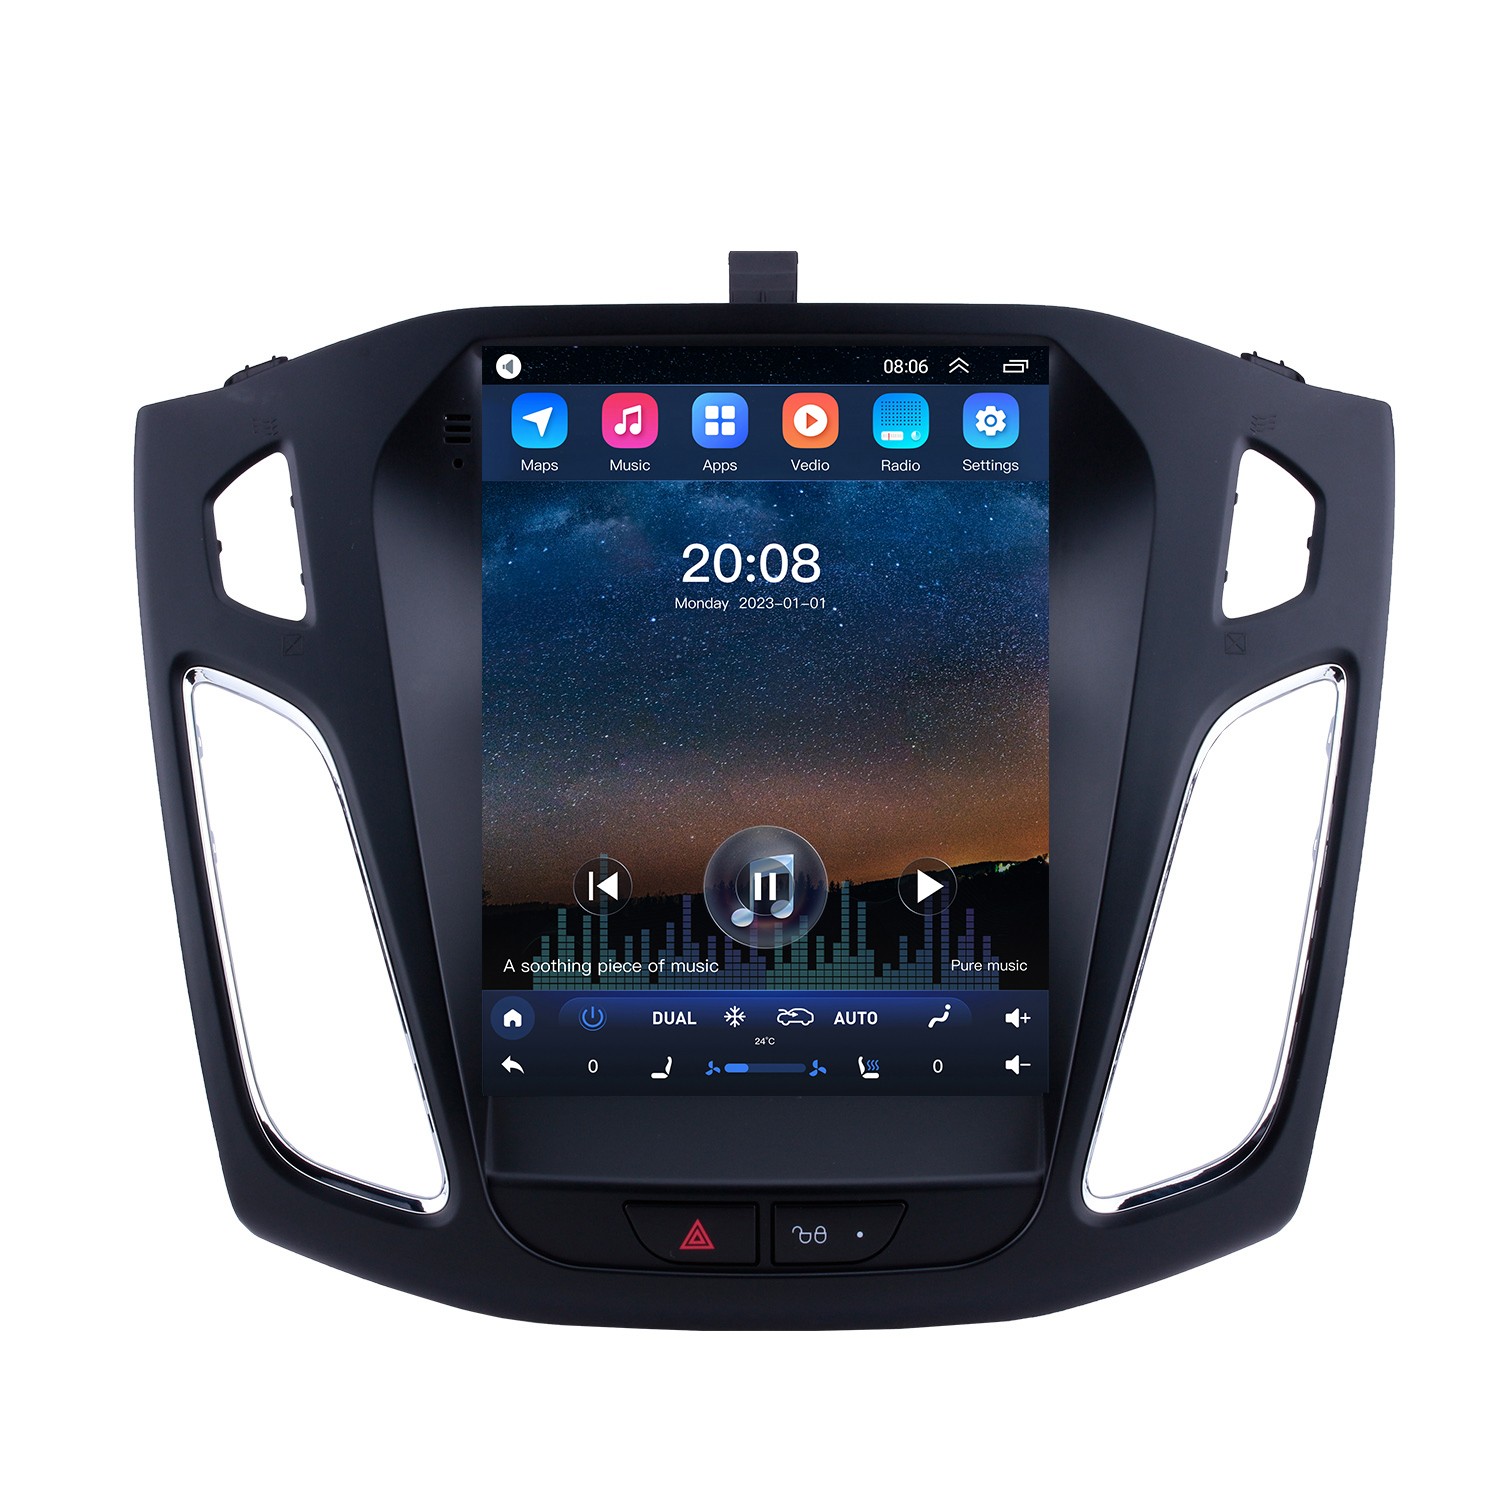 Android 11 Radio Coche 2 DIN con Apple Carplay/Android Auto, 2+32G Radio  Coche Bluetooth con GPS Navigation, 7 Pulgadas Pantalla Táctil 2 DIN Radio  con Mirror Link GPS/WiFi/FM Cámara Trasera+Micrófo : 